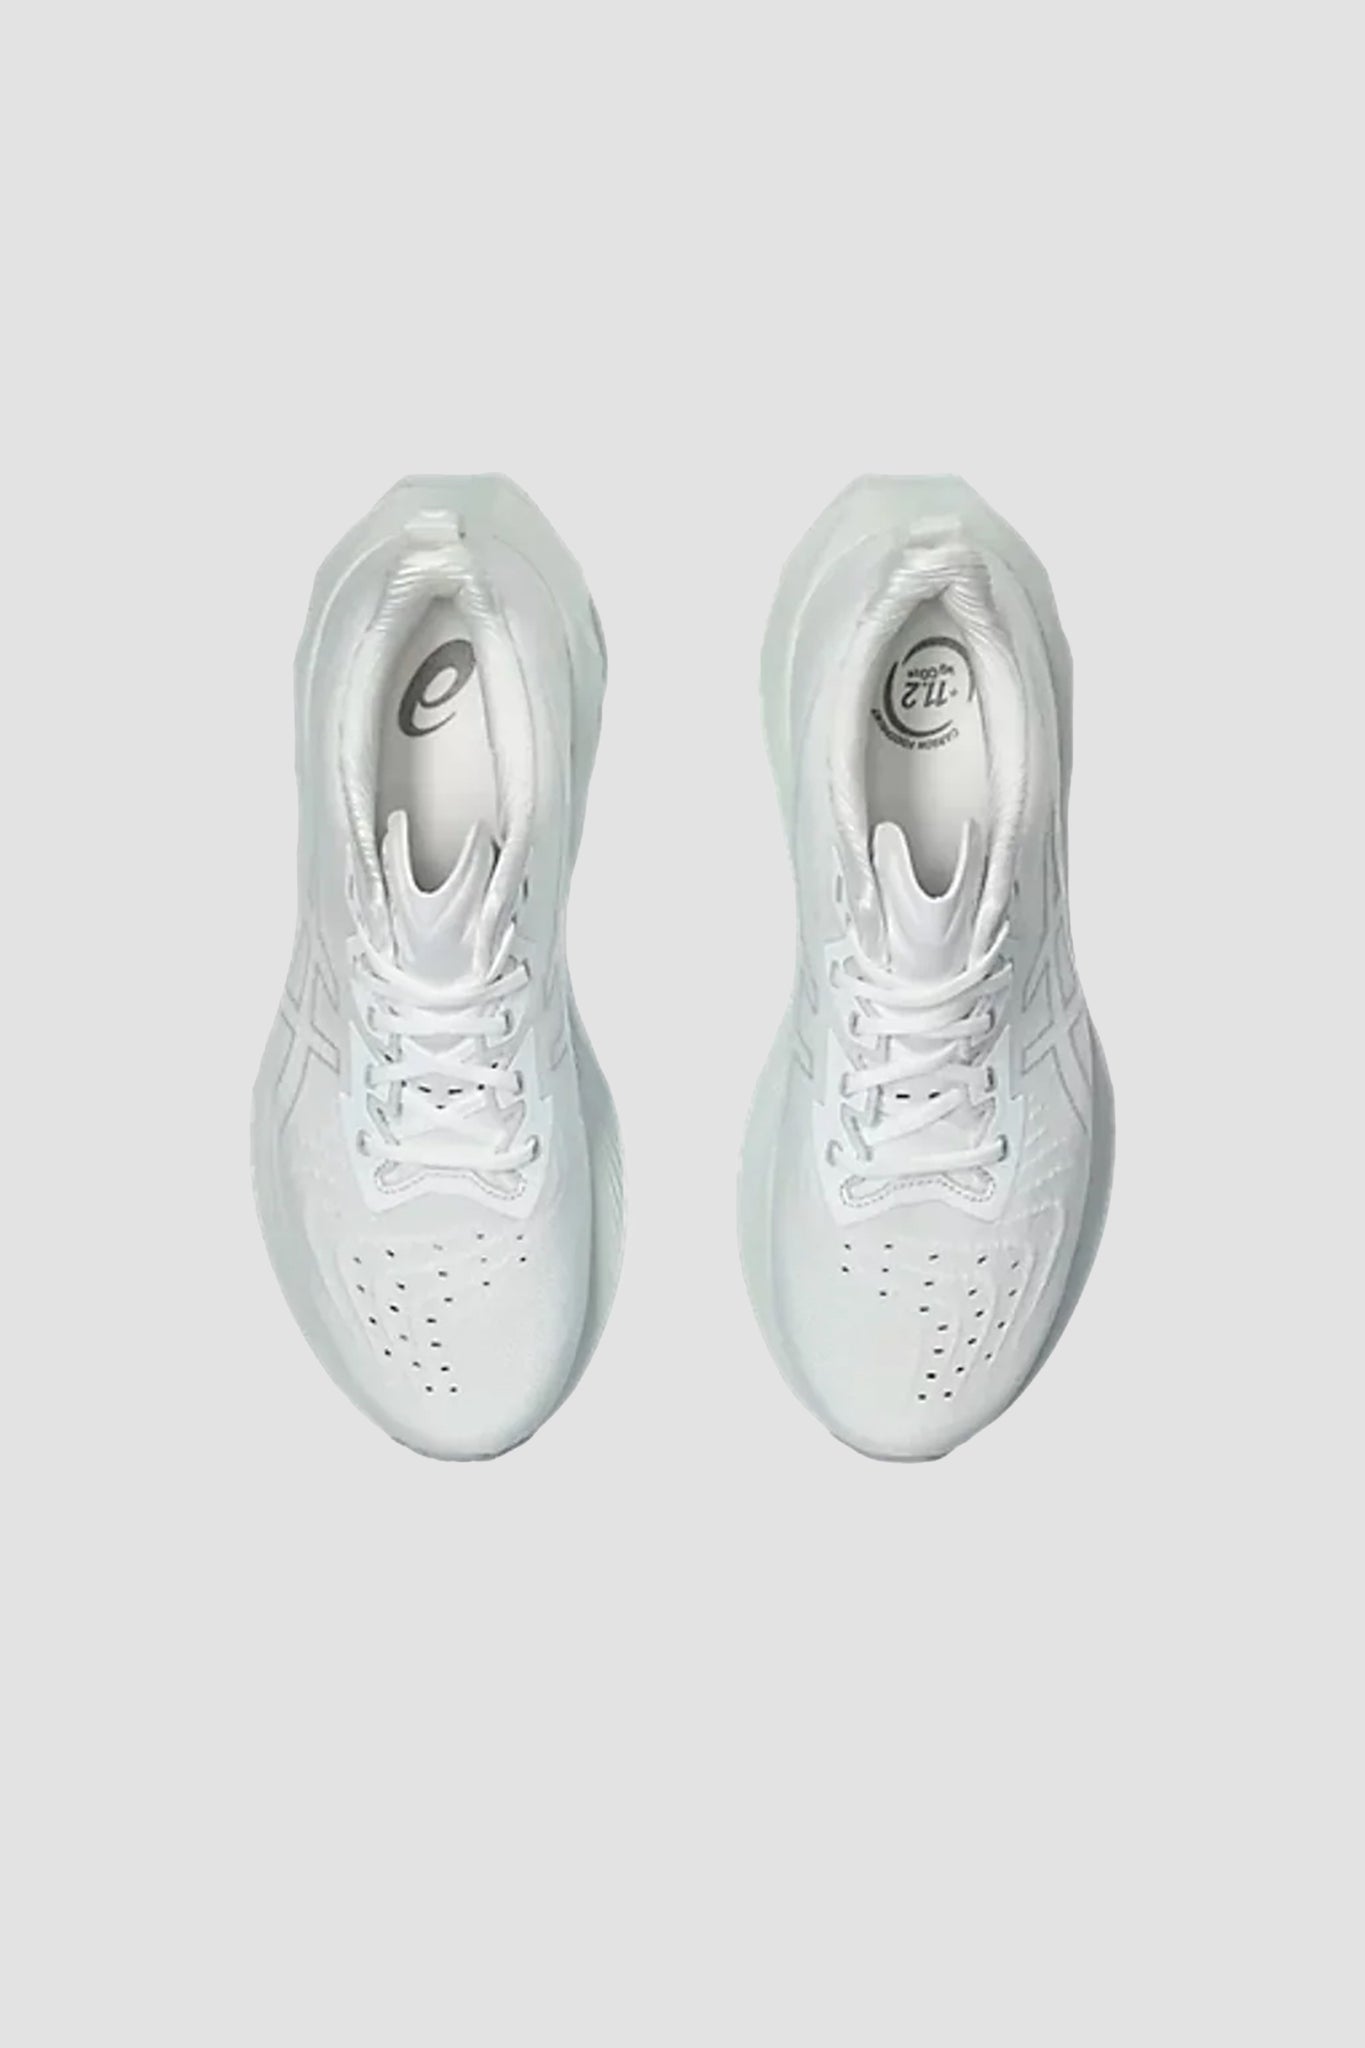 ASICS Men's Novablast 4 Sneaker in White/Pale Mint